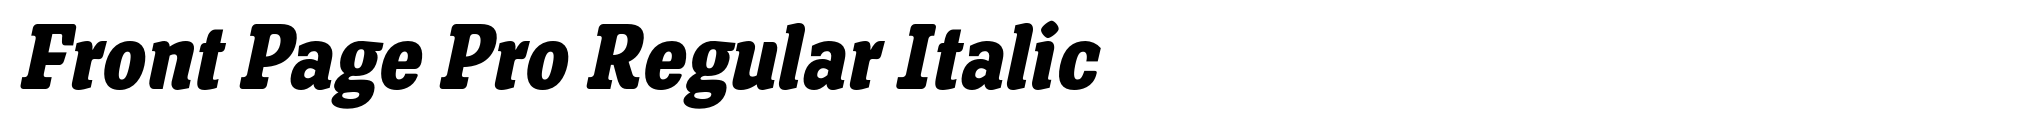 Front Page Pro Regular Italic image